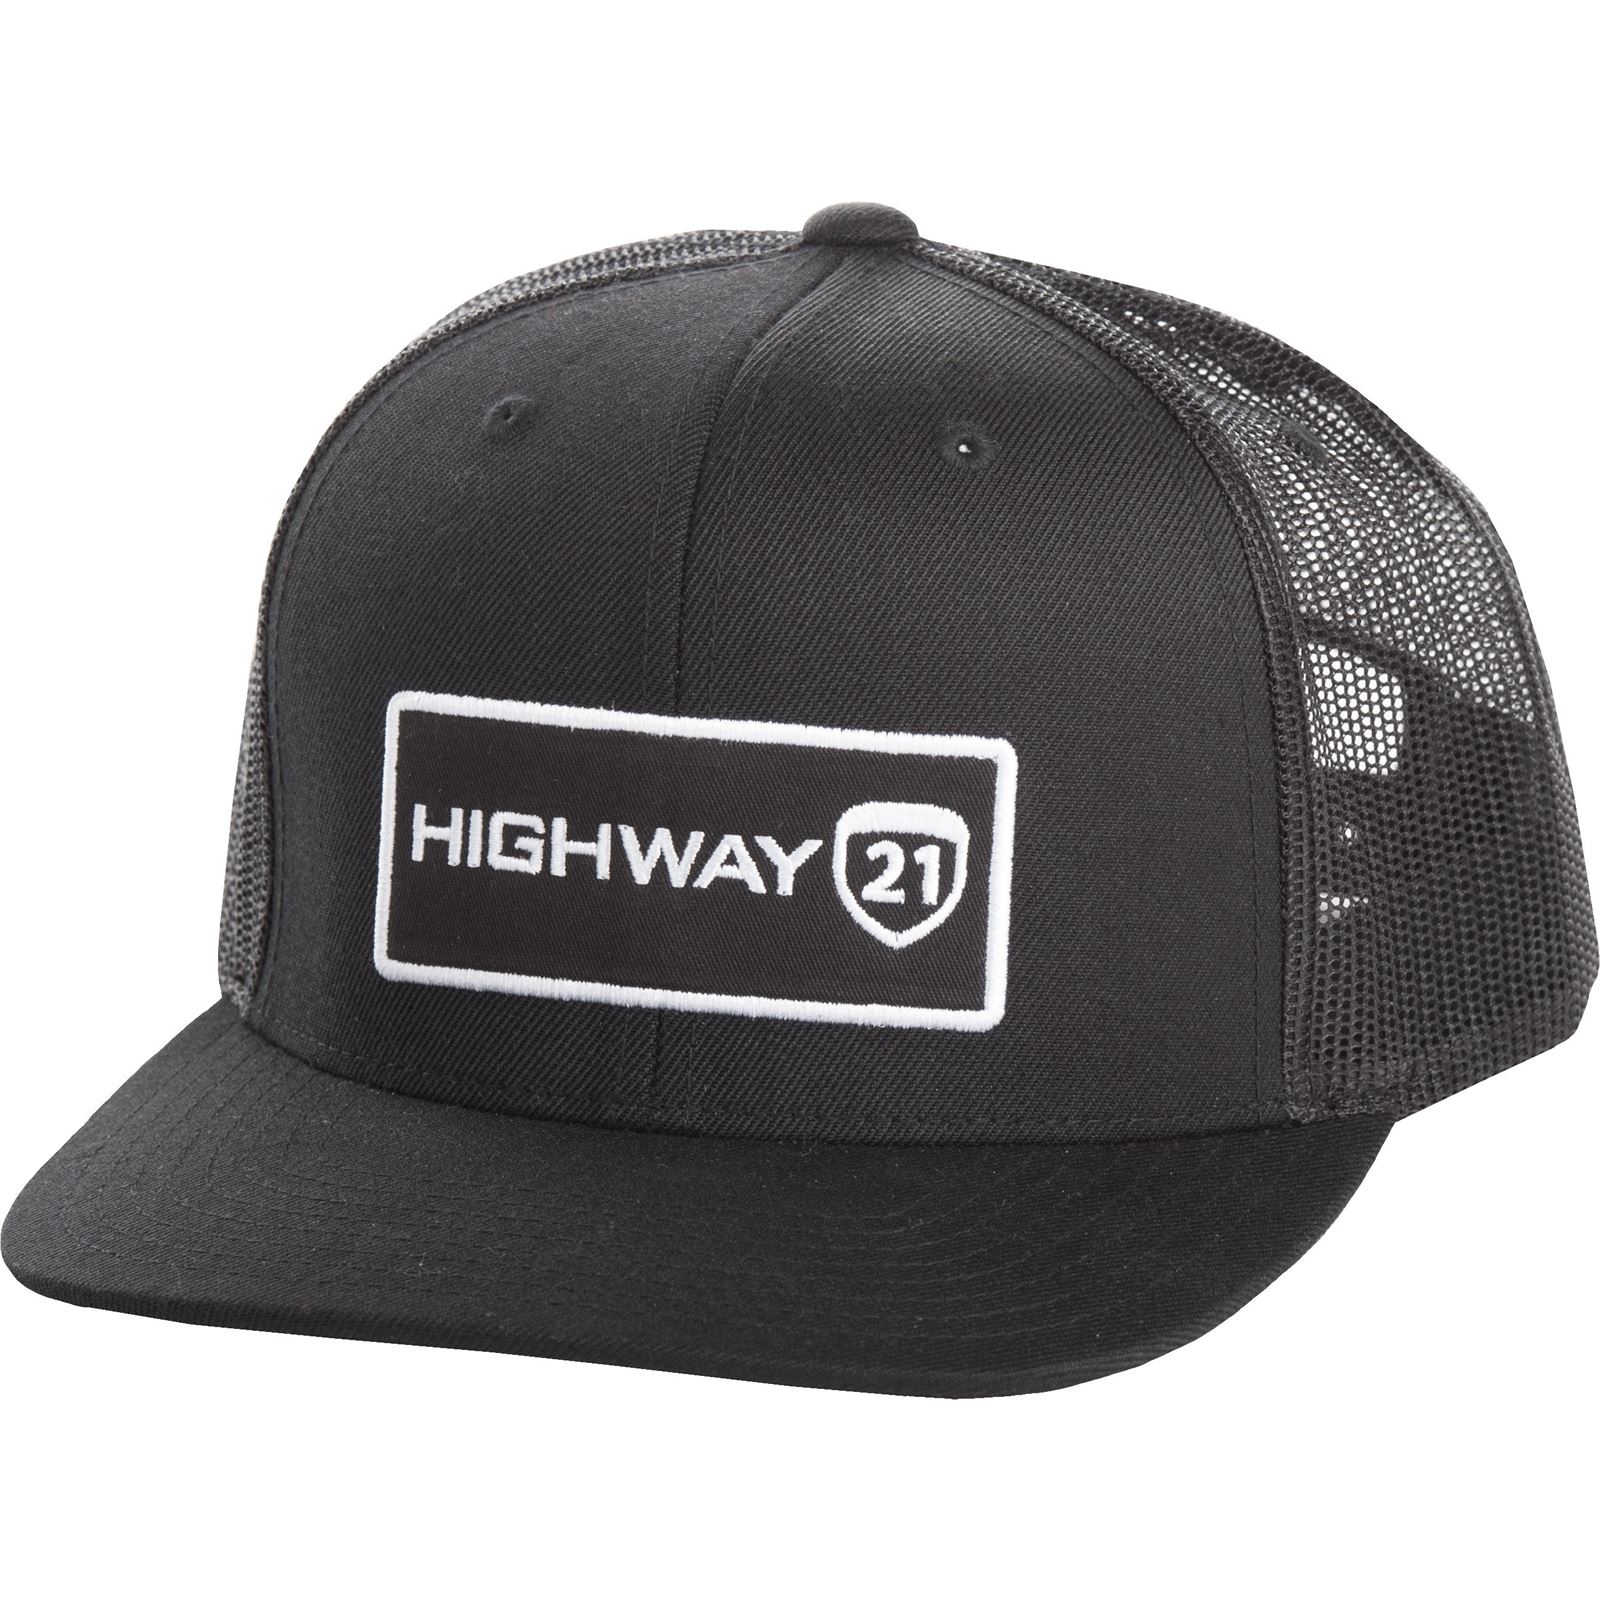 Highway 21 Corporate Hat Black